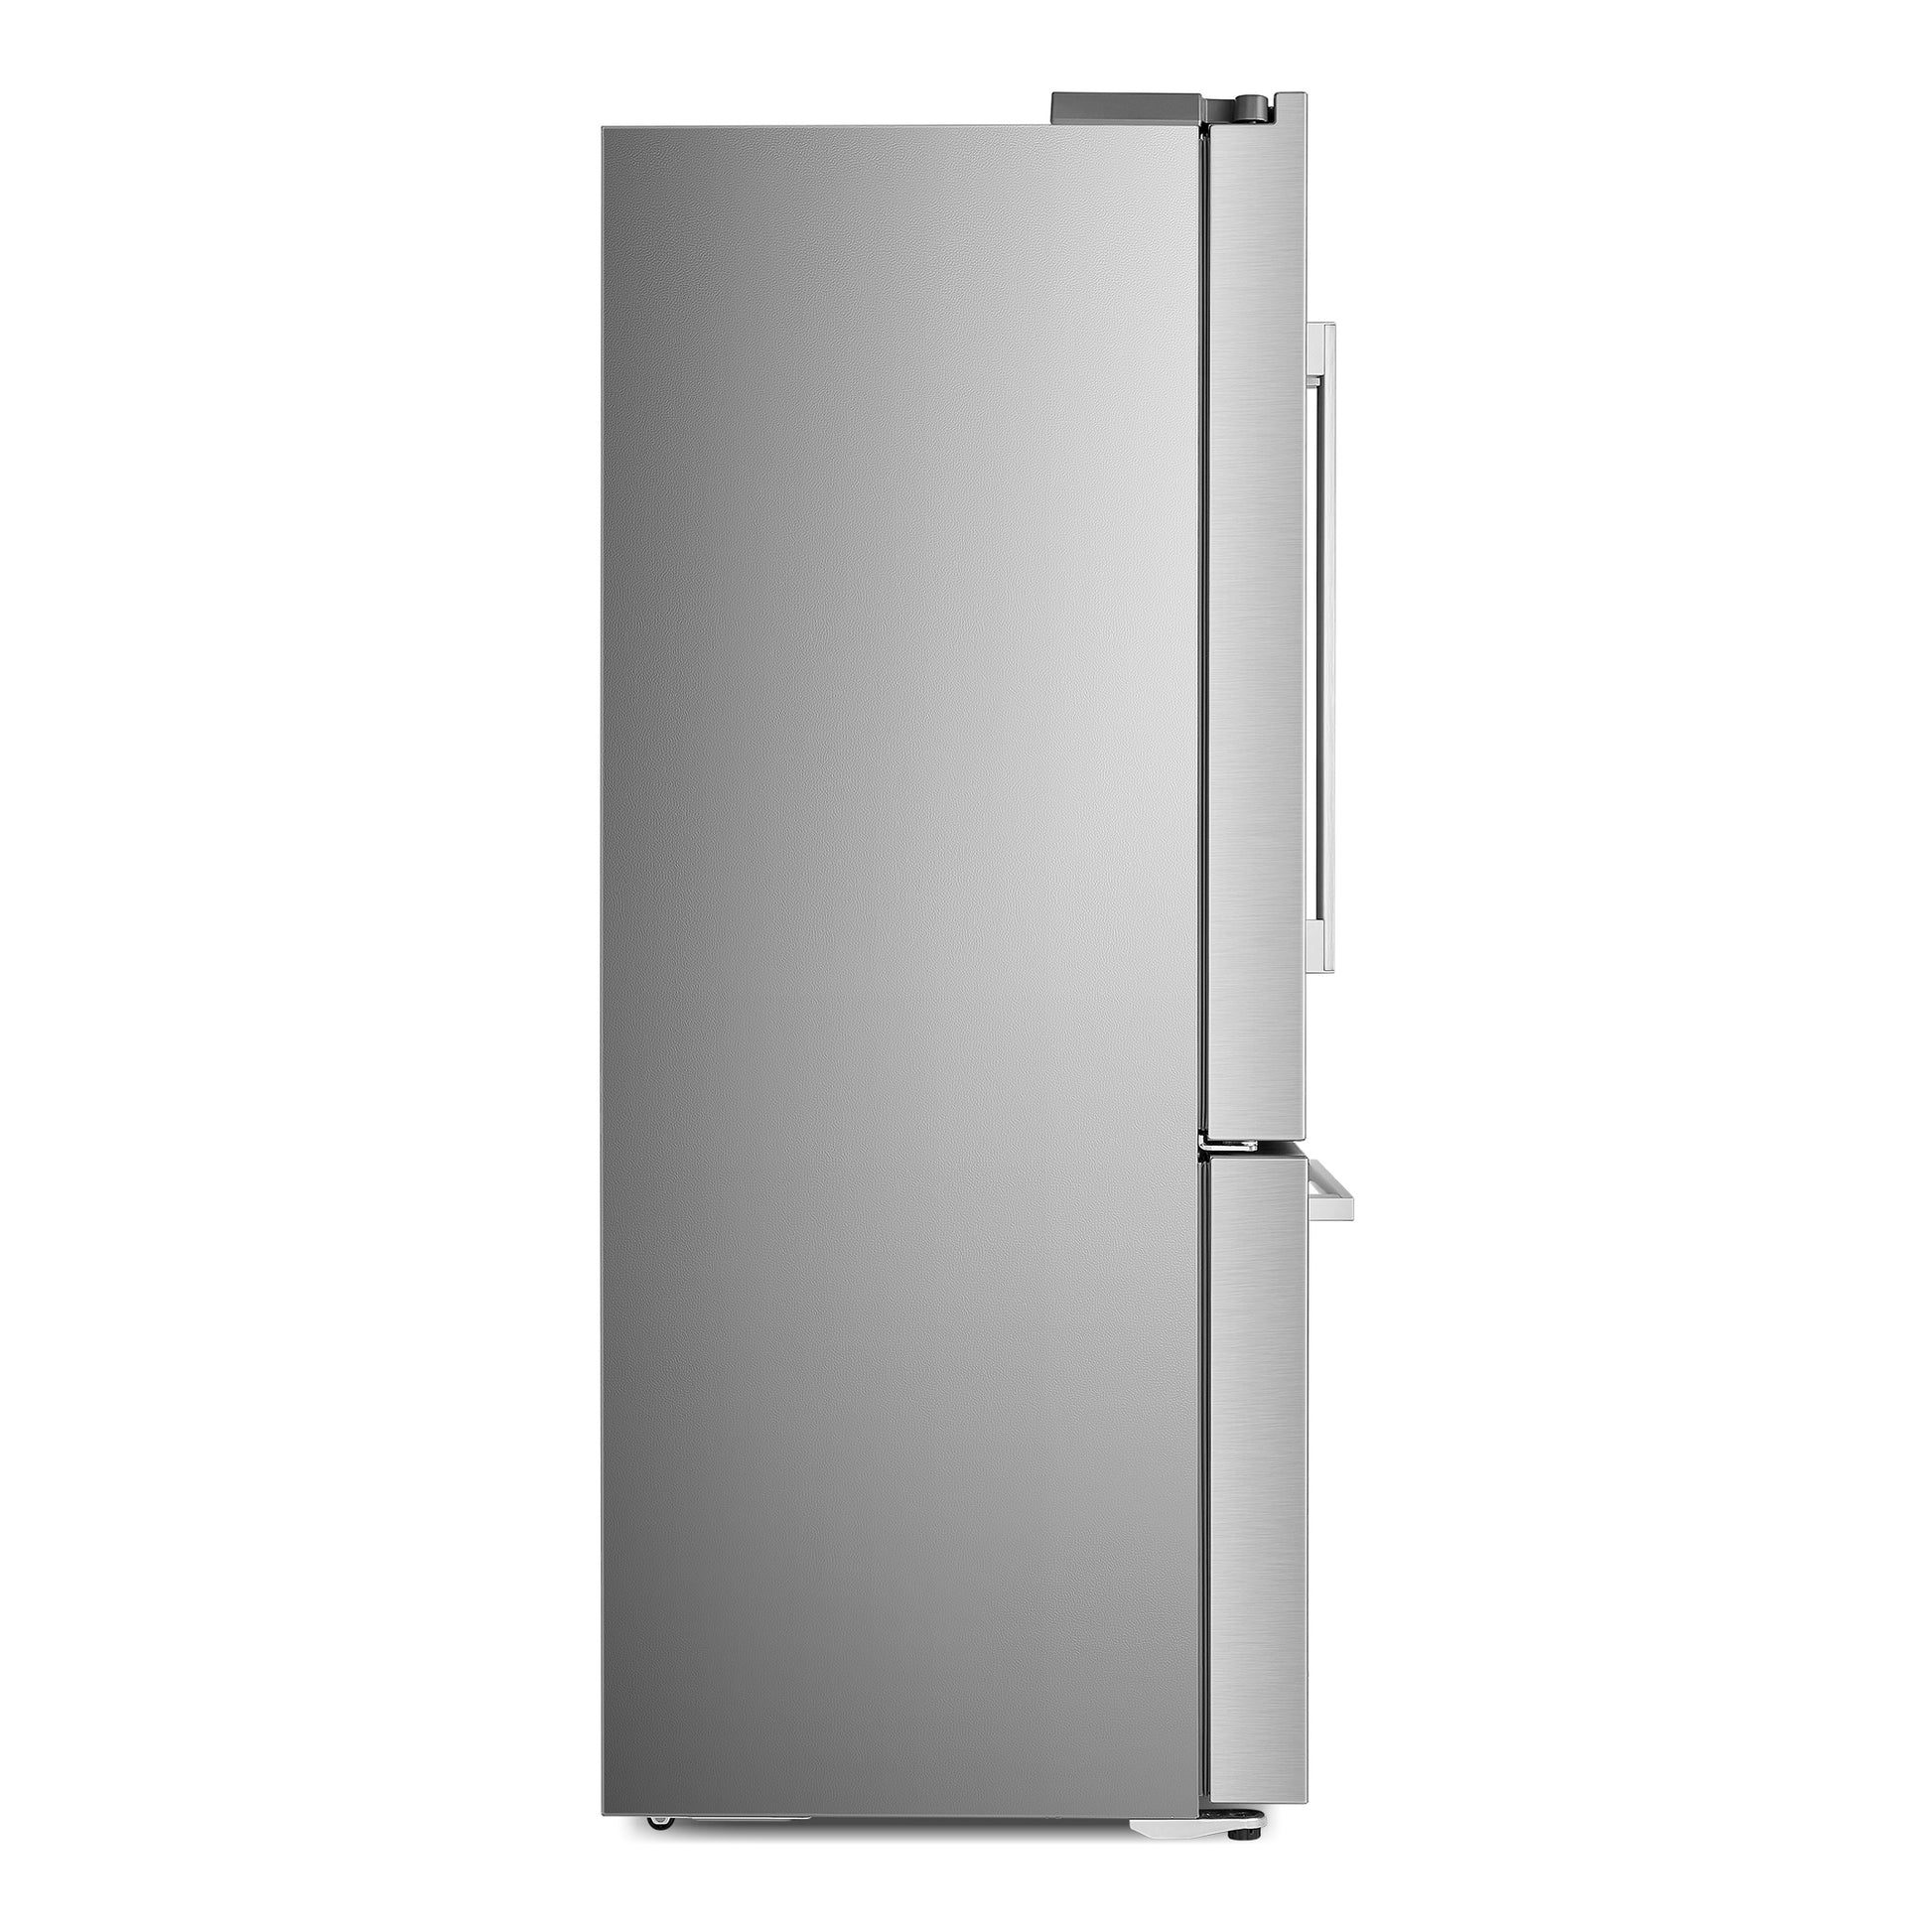 Cosmo 22.4 cu. ft. 3-Door French Door Refrigerator with Water Dispenser and Ice Maker in Stainless Steel